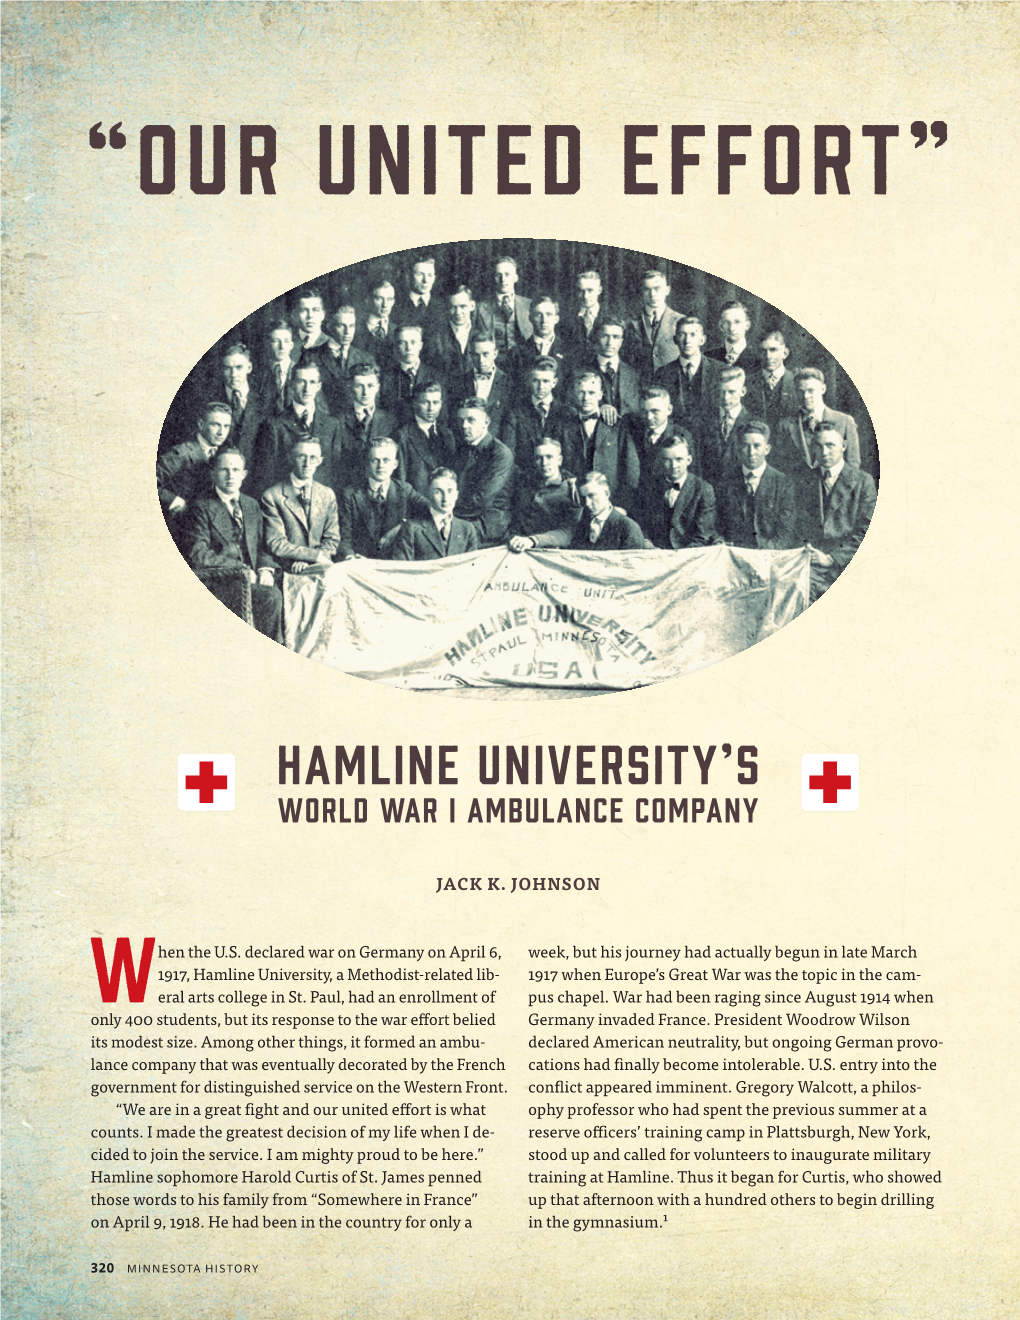 Hamline University's World War I Ambulance Company